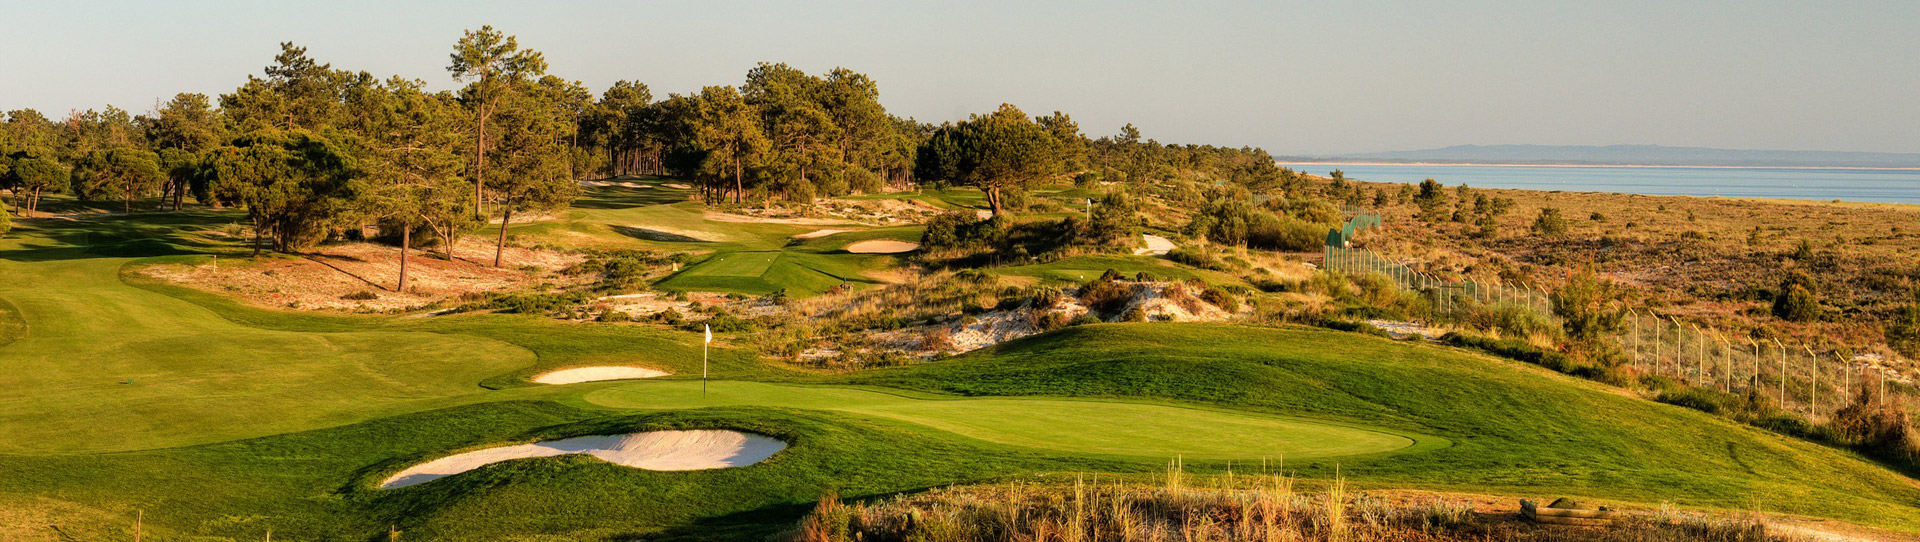 Portugal golf courses - Troia Golf Course - Photo 1